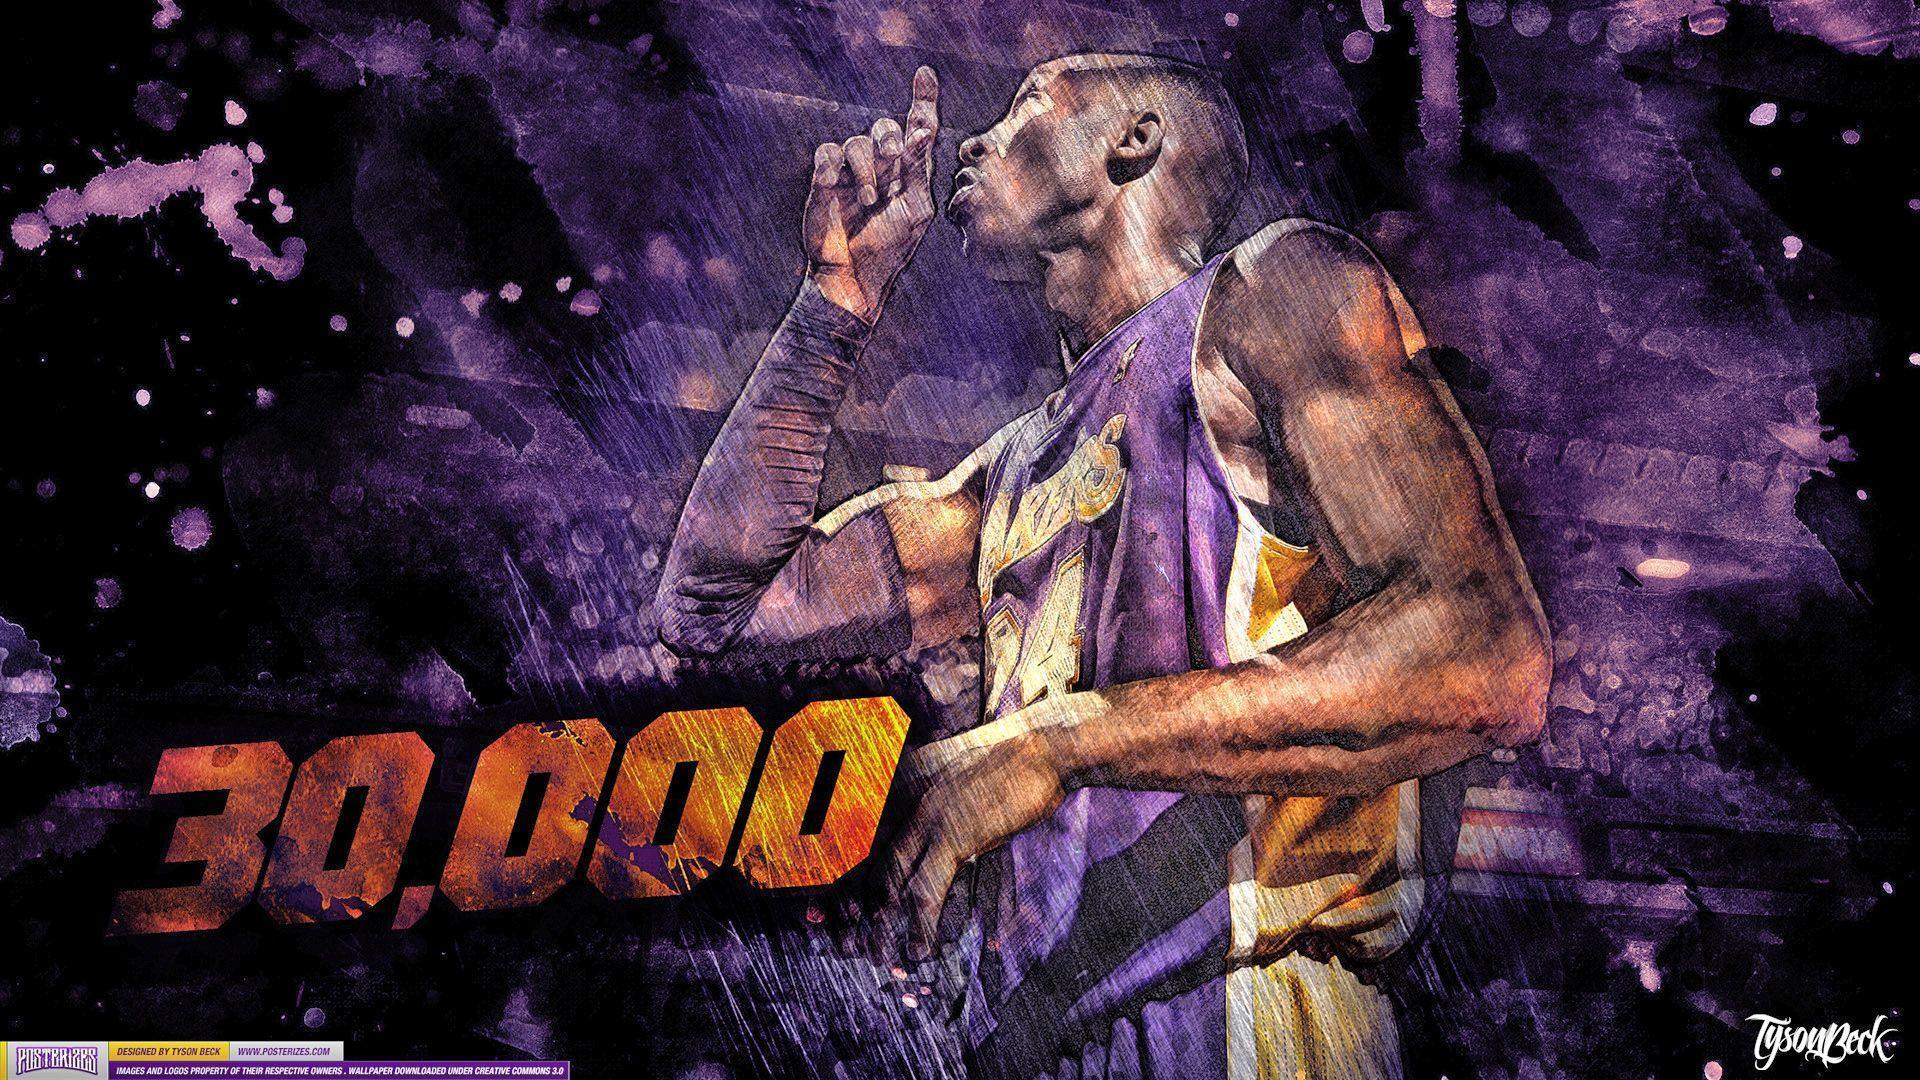 Kobe Bryant - &;000&; (WALLPAPER)